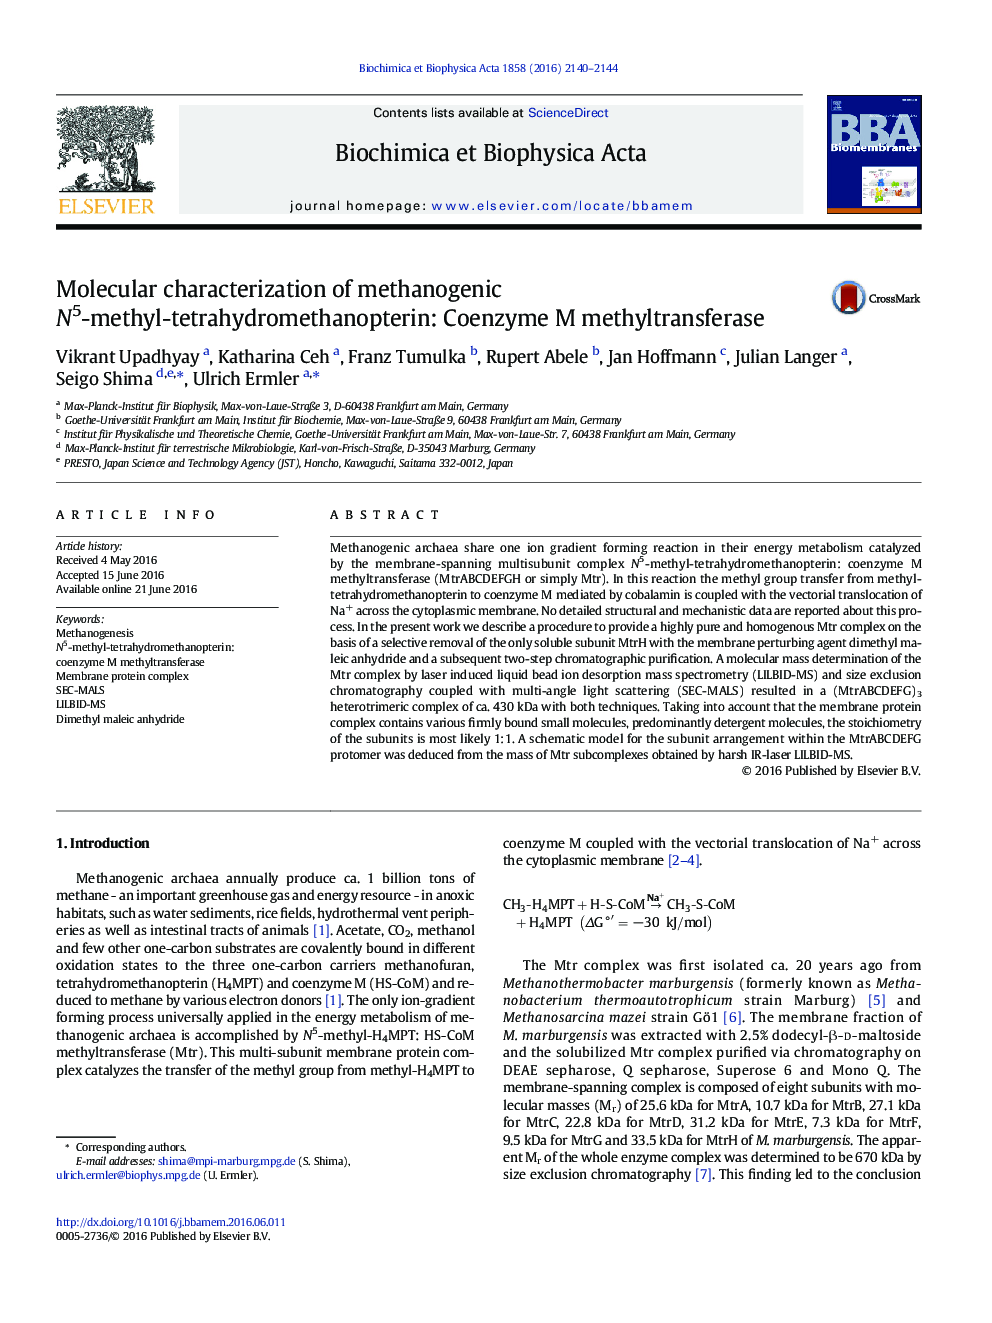 Molecular characterization of methanogenic N5-methyl-tetrahydromethanopterin: Coenzyme M methyltransferase